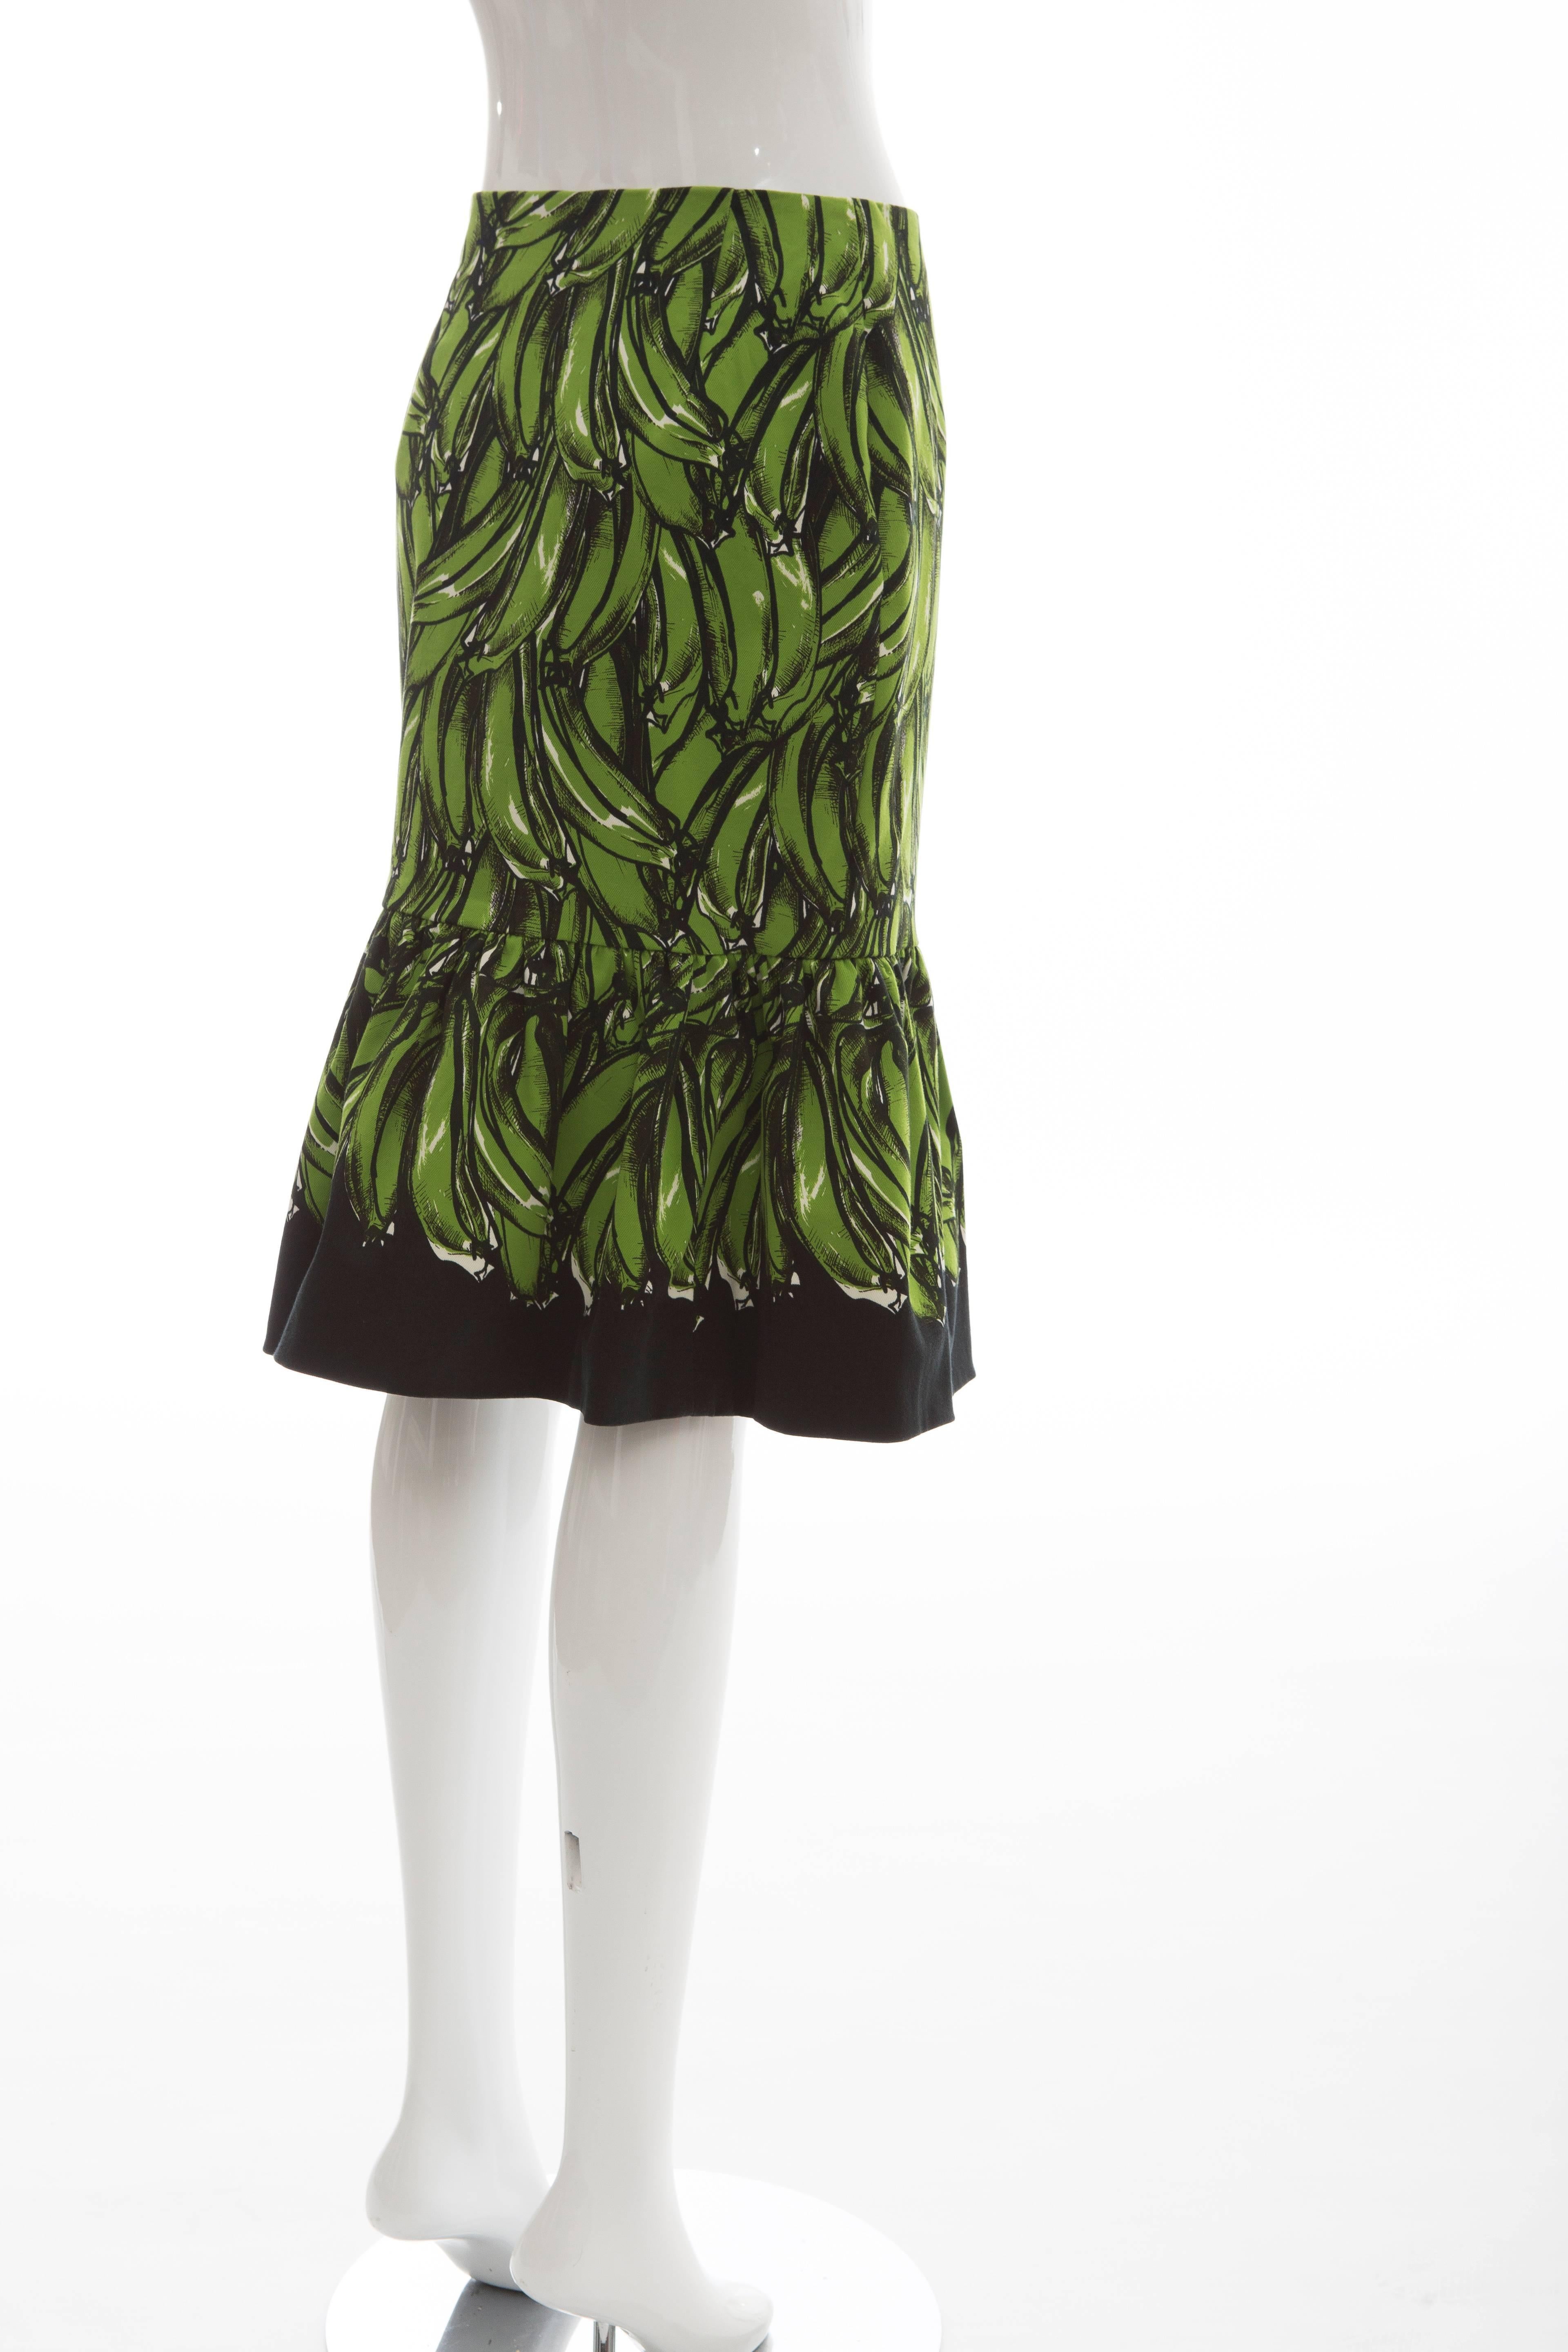 Prada Cotton Banana Print Skirt, Spring - Summer 2011 1